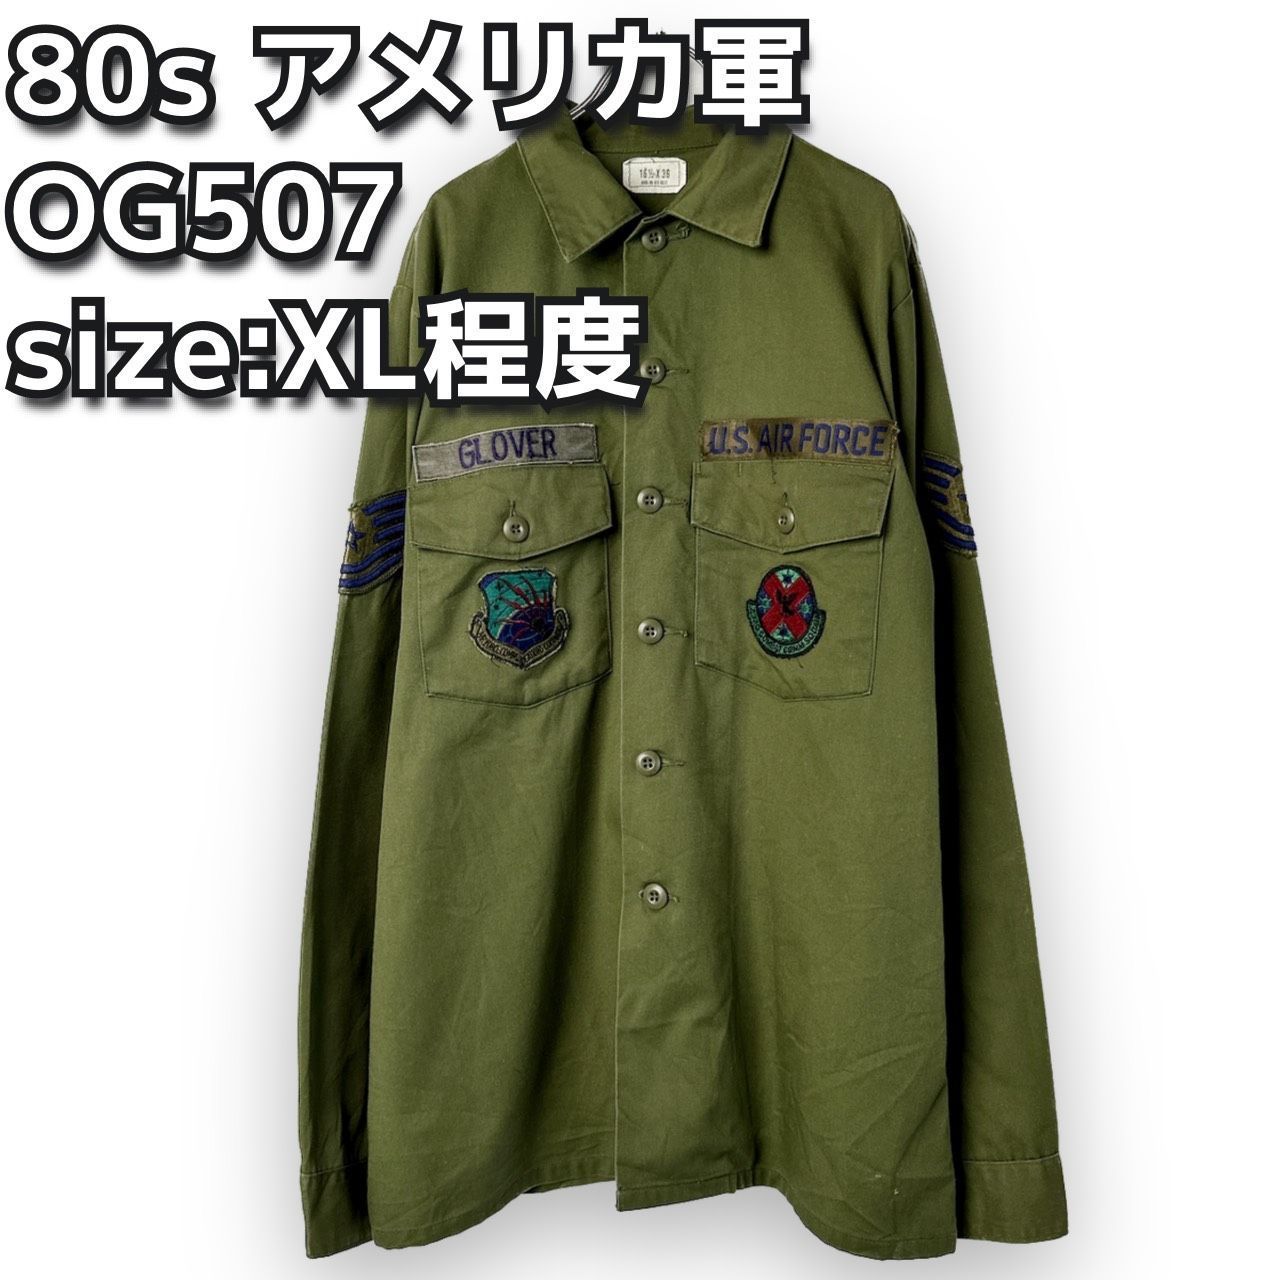 80s U .S .ARMY ユーティシャツ OG507 シャツ袖 ミリタリー vintage